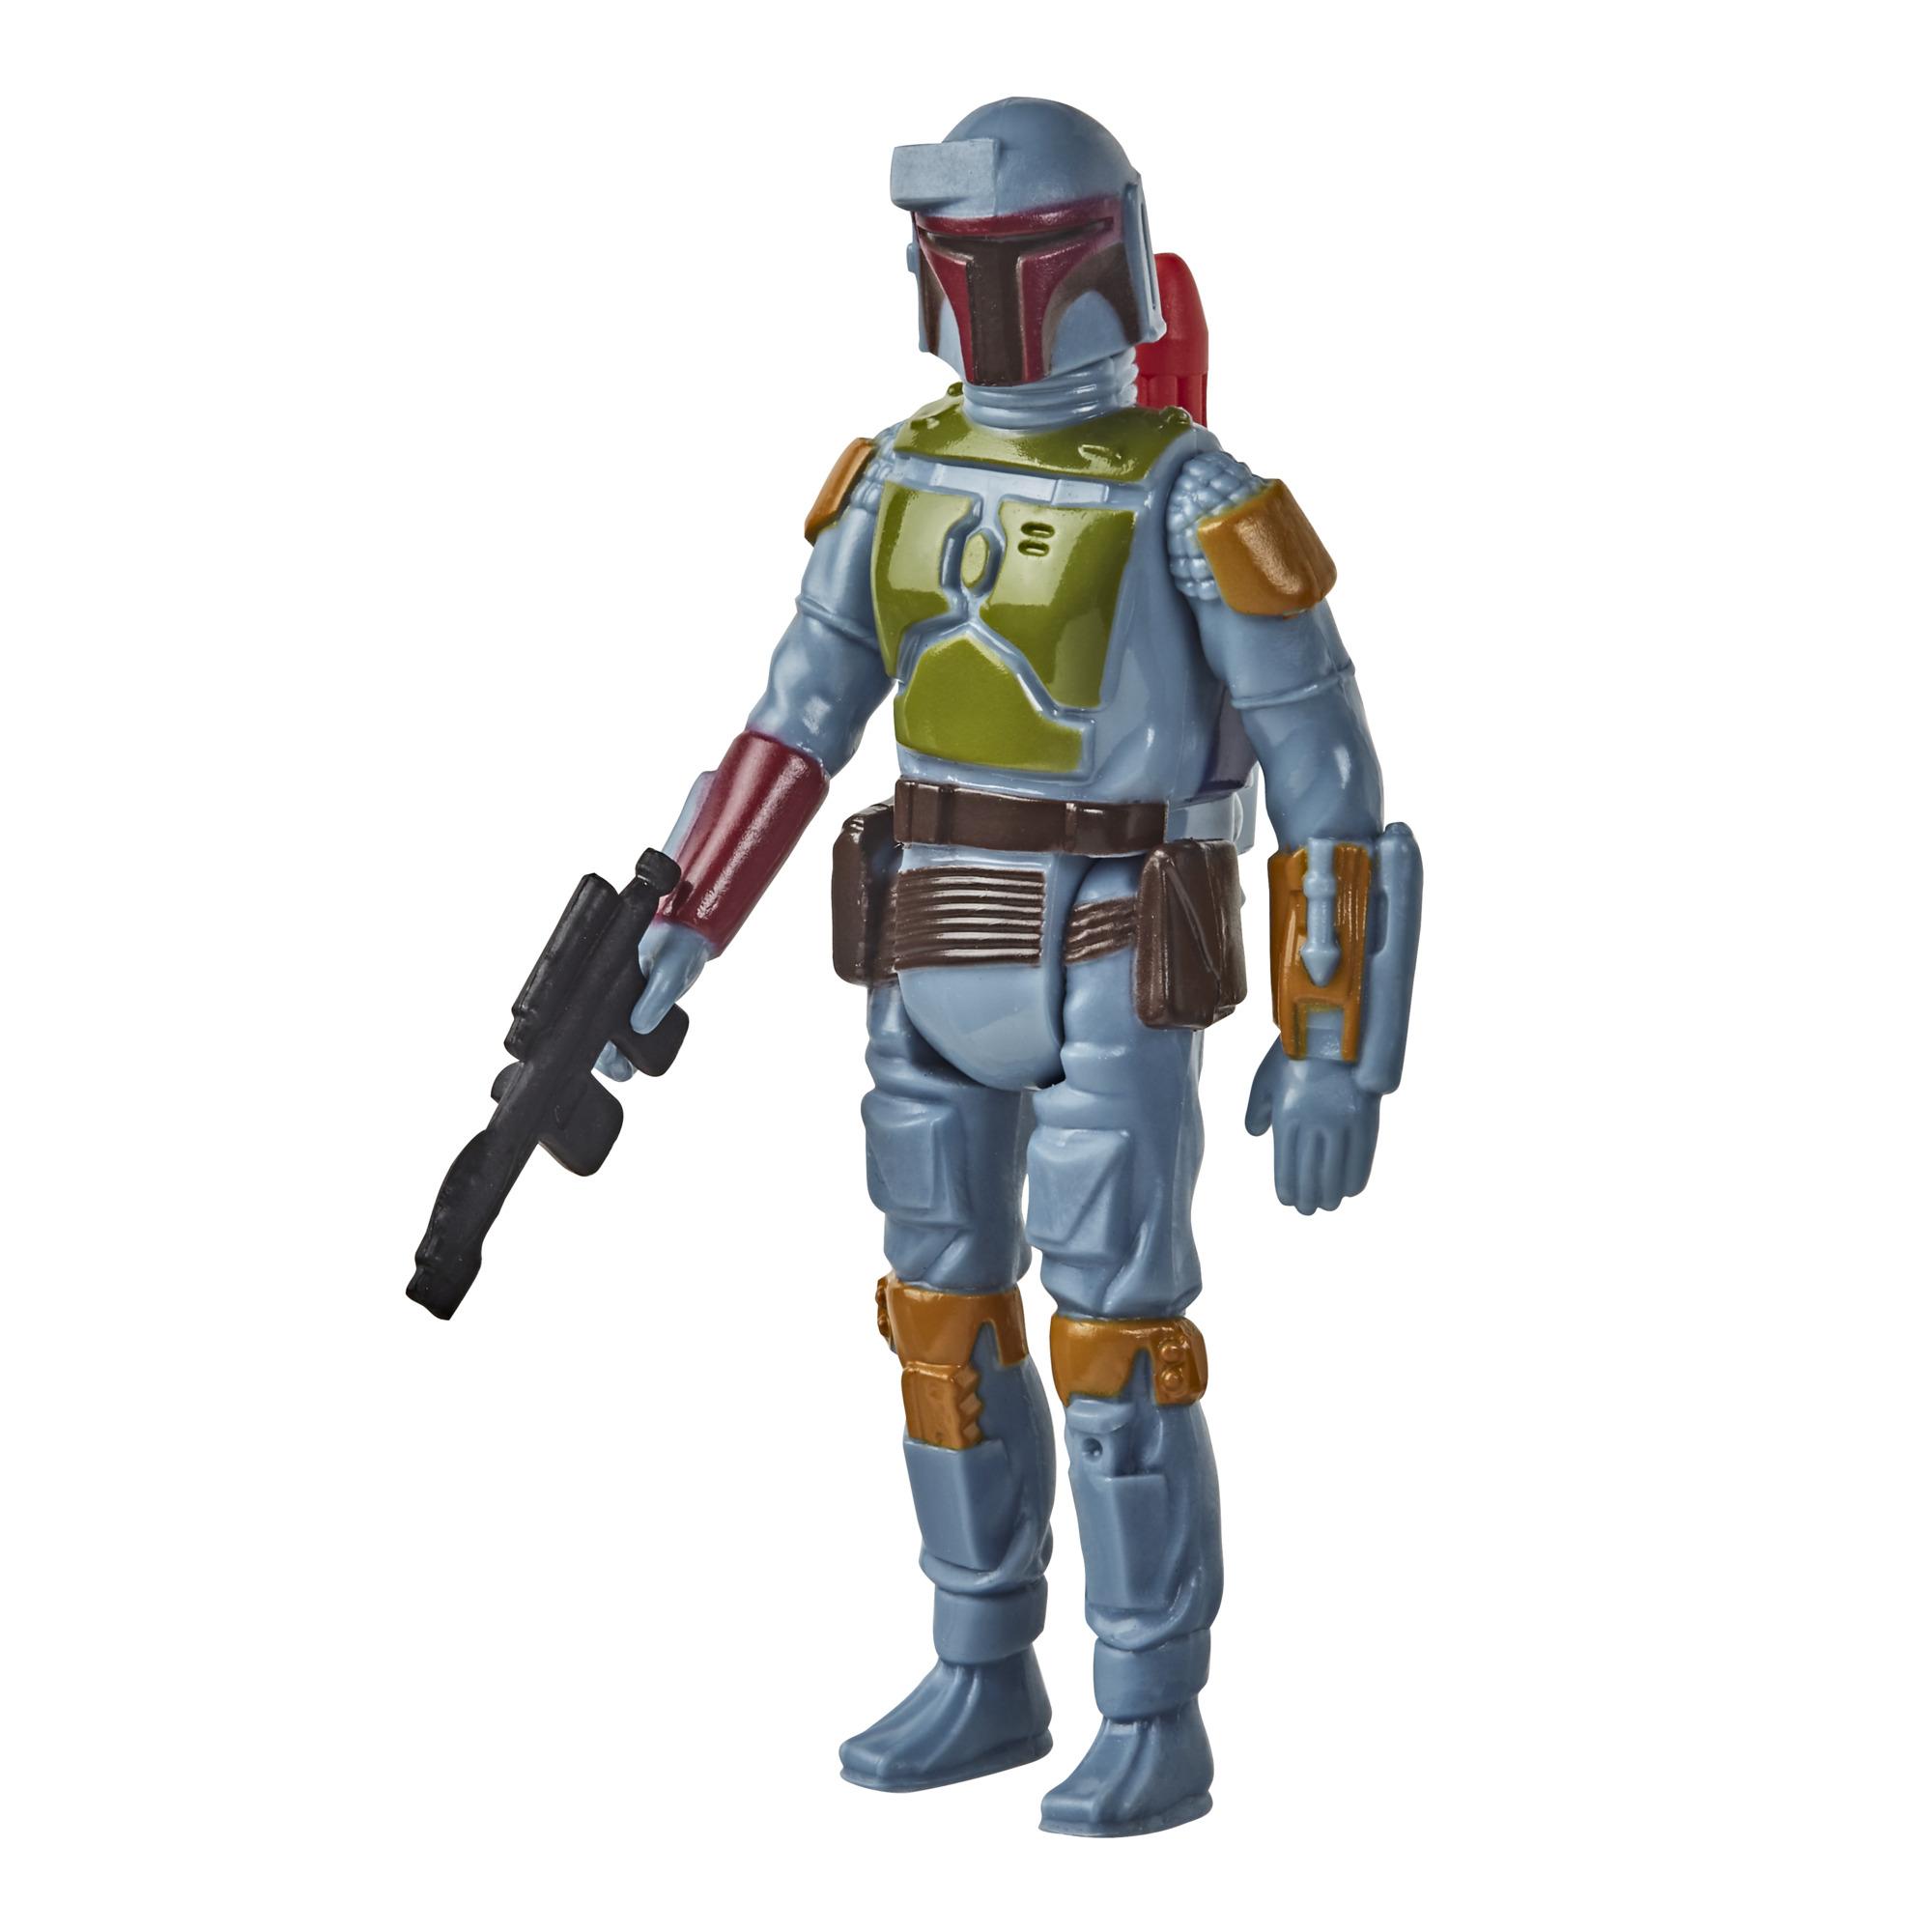 Hasbro Star Wars The Empire Strikes Back Boba Fett Action Figure for sale online